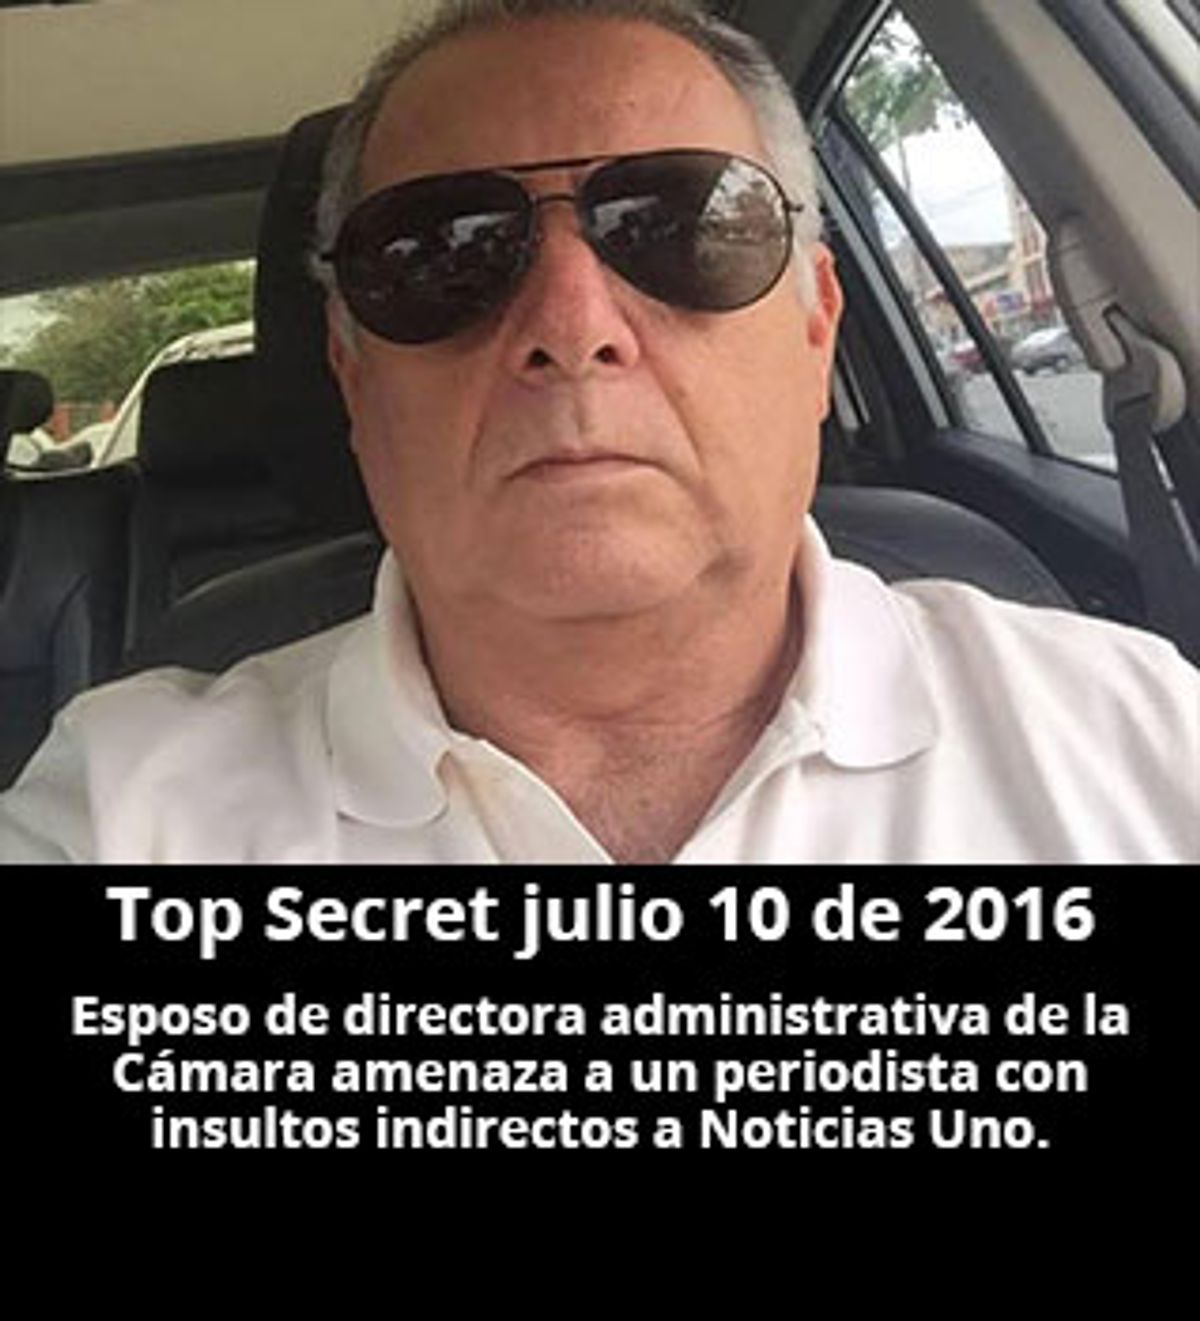 Top secret julio 10 de 2016